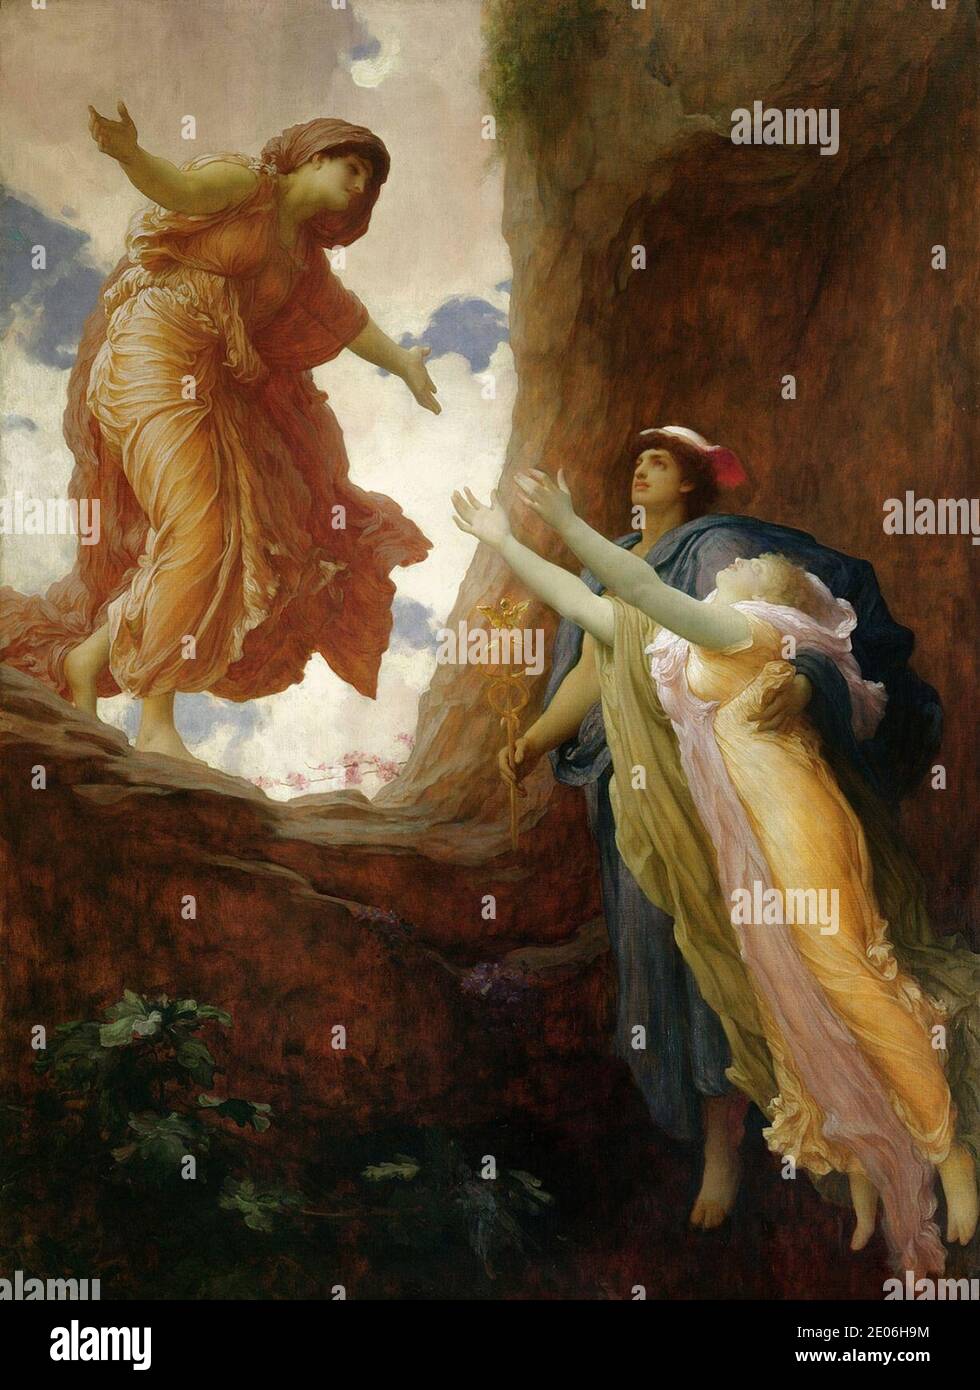 Frederic Leighton - The Return of Persephone (1891). Stock Photo